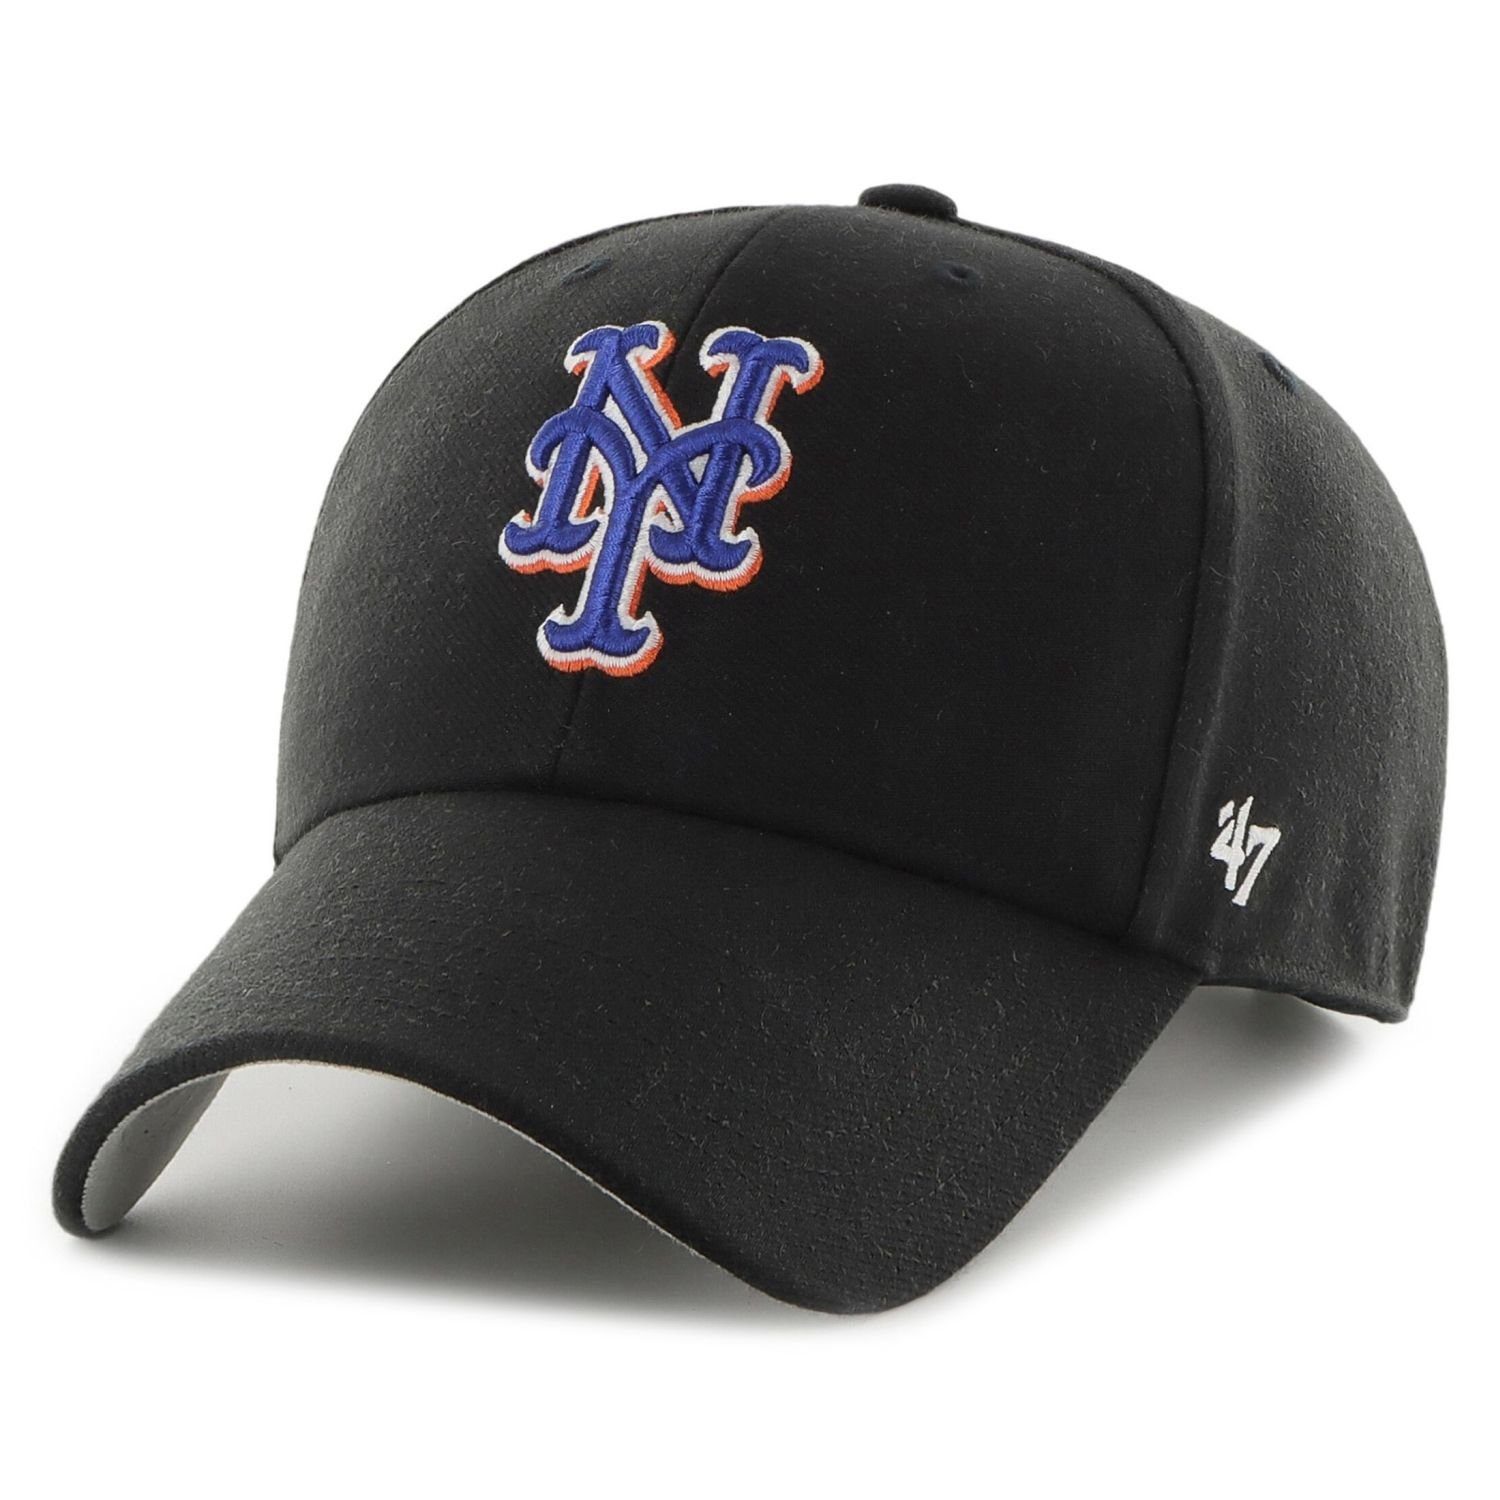 '47 New WORLD York Snapback Cap Mets Brand SERIES